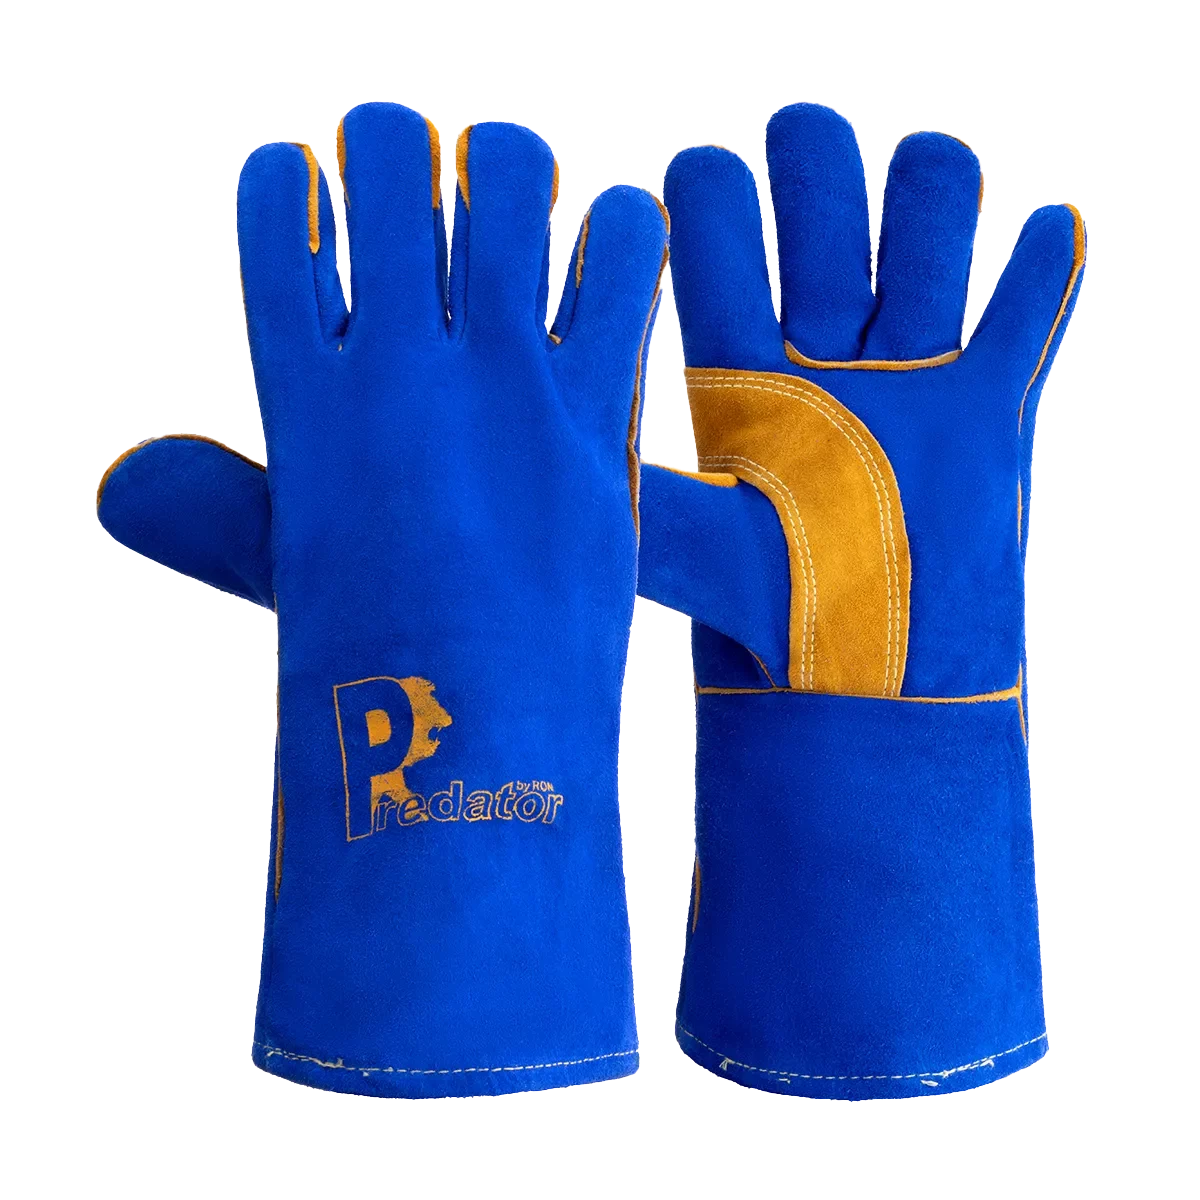 RSW1C-KEV Pair Safety Gloves